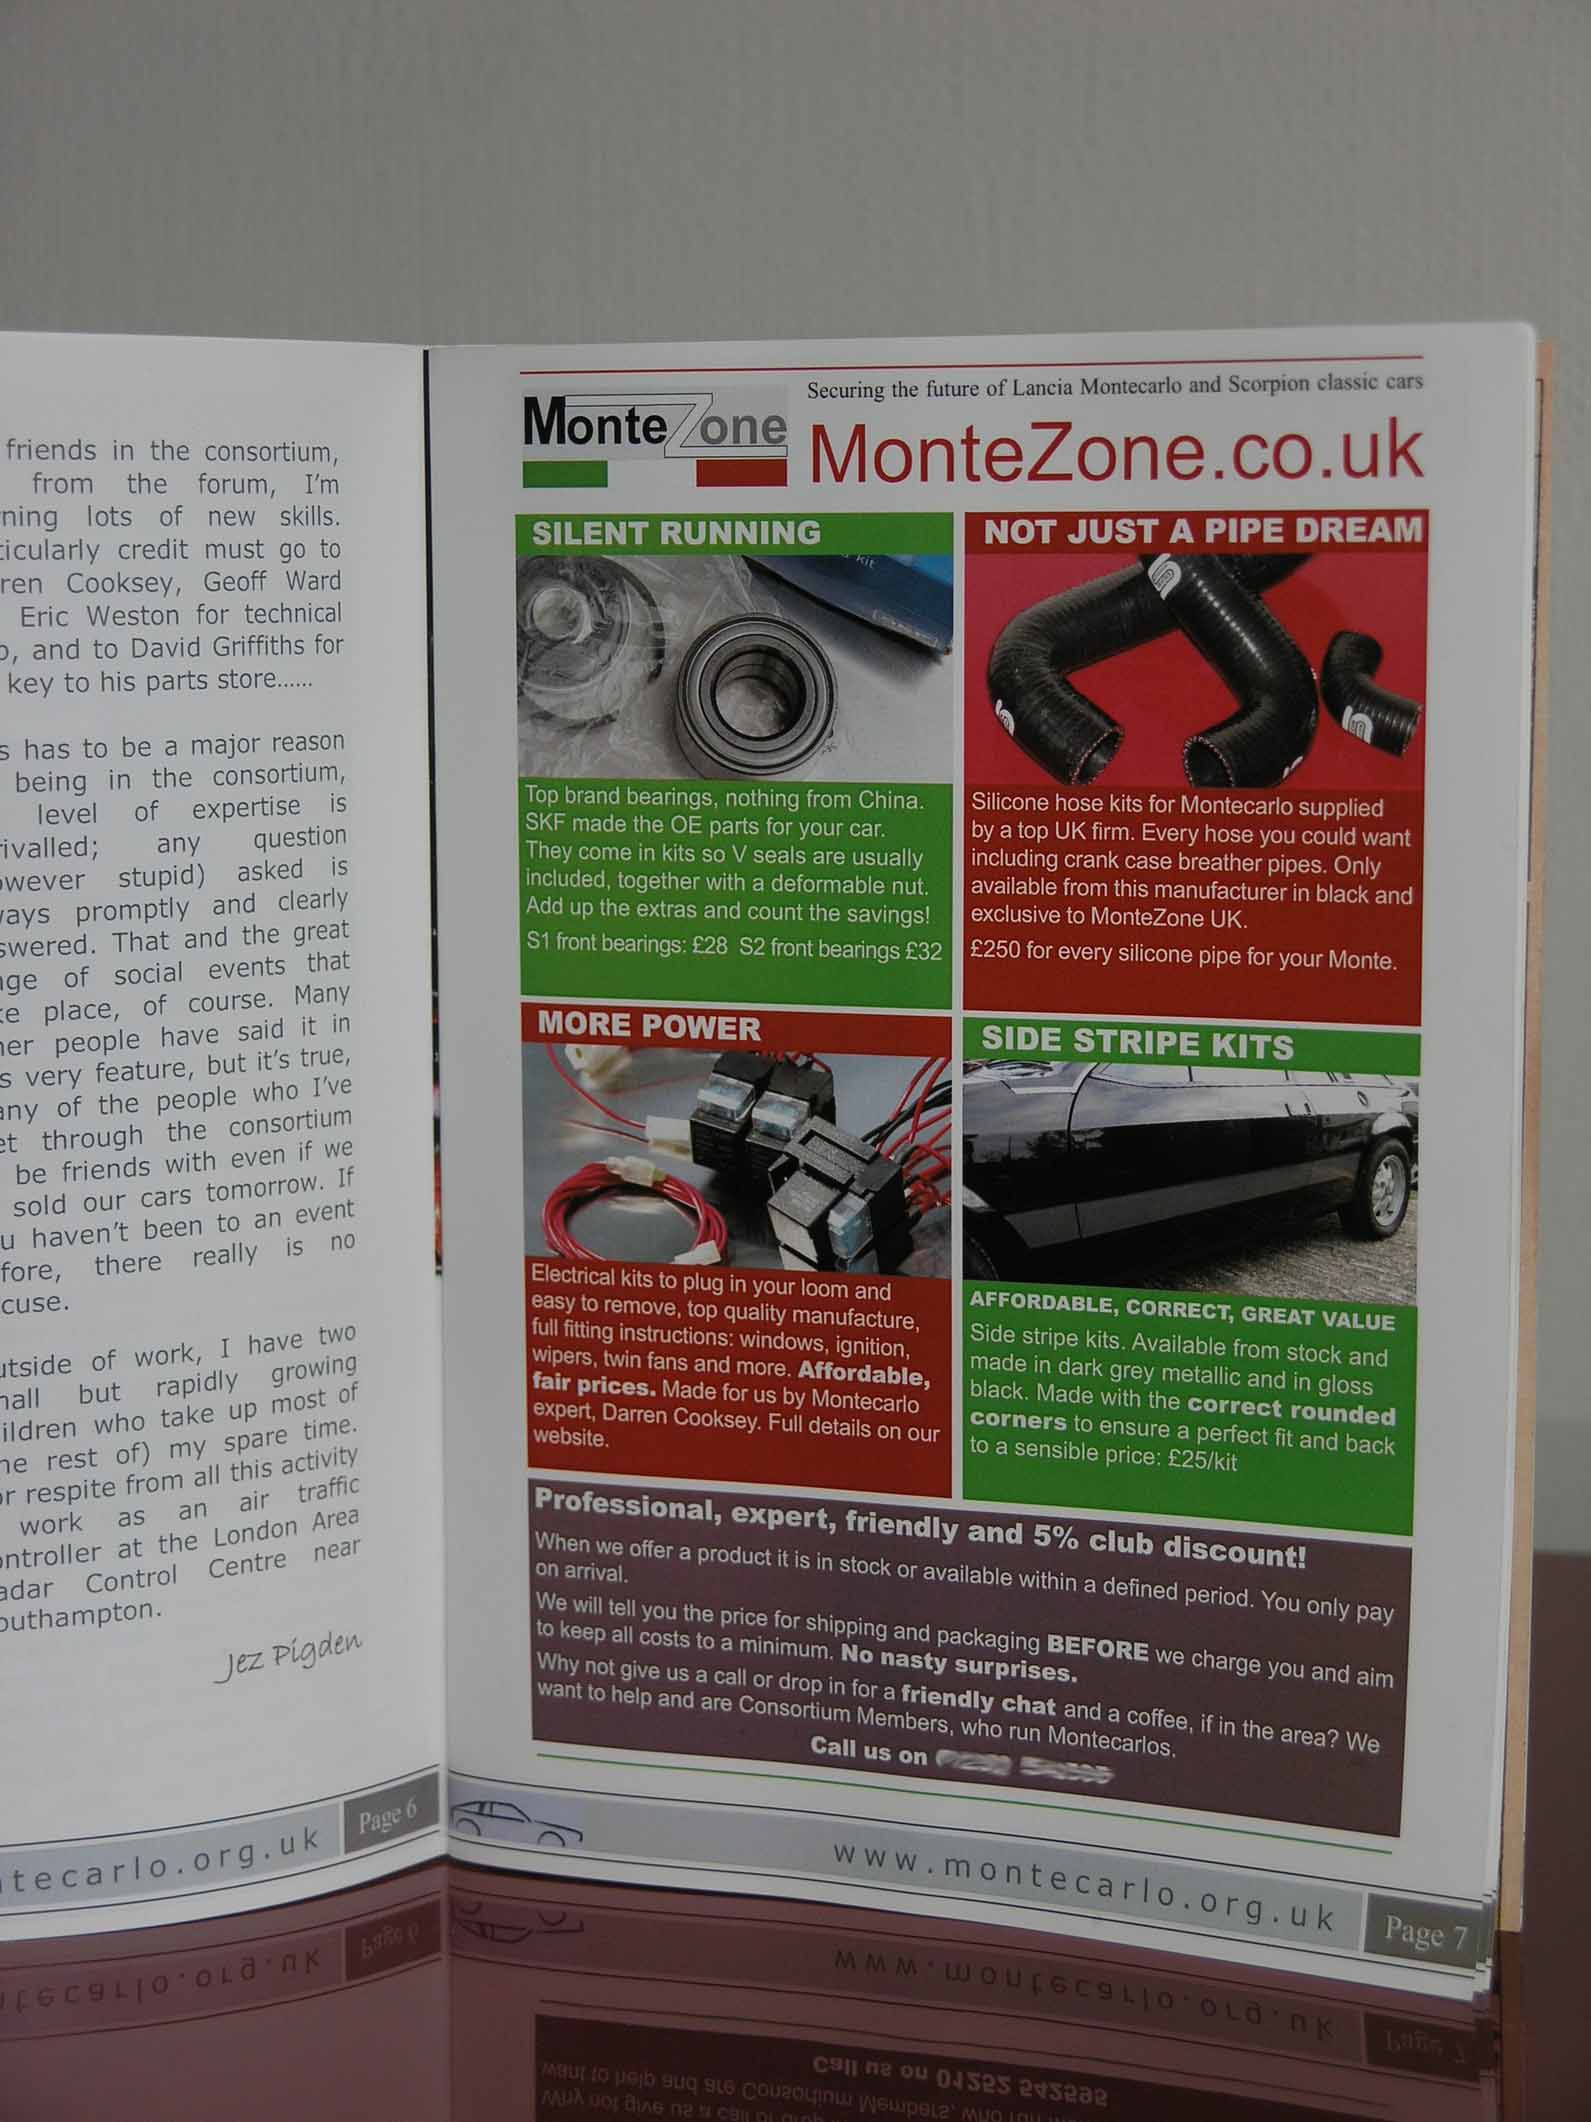 Montezone UK print advert in publication